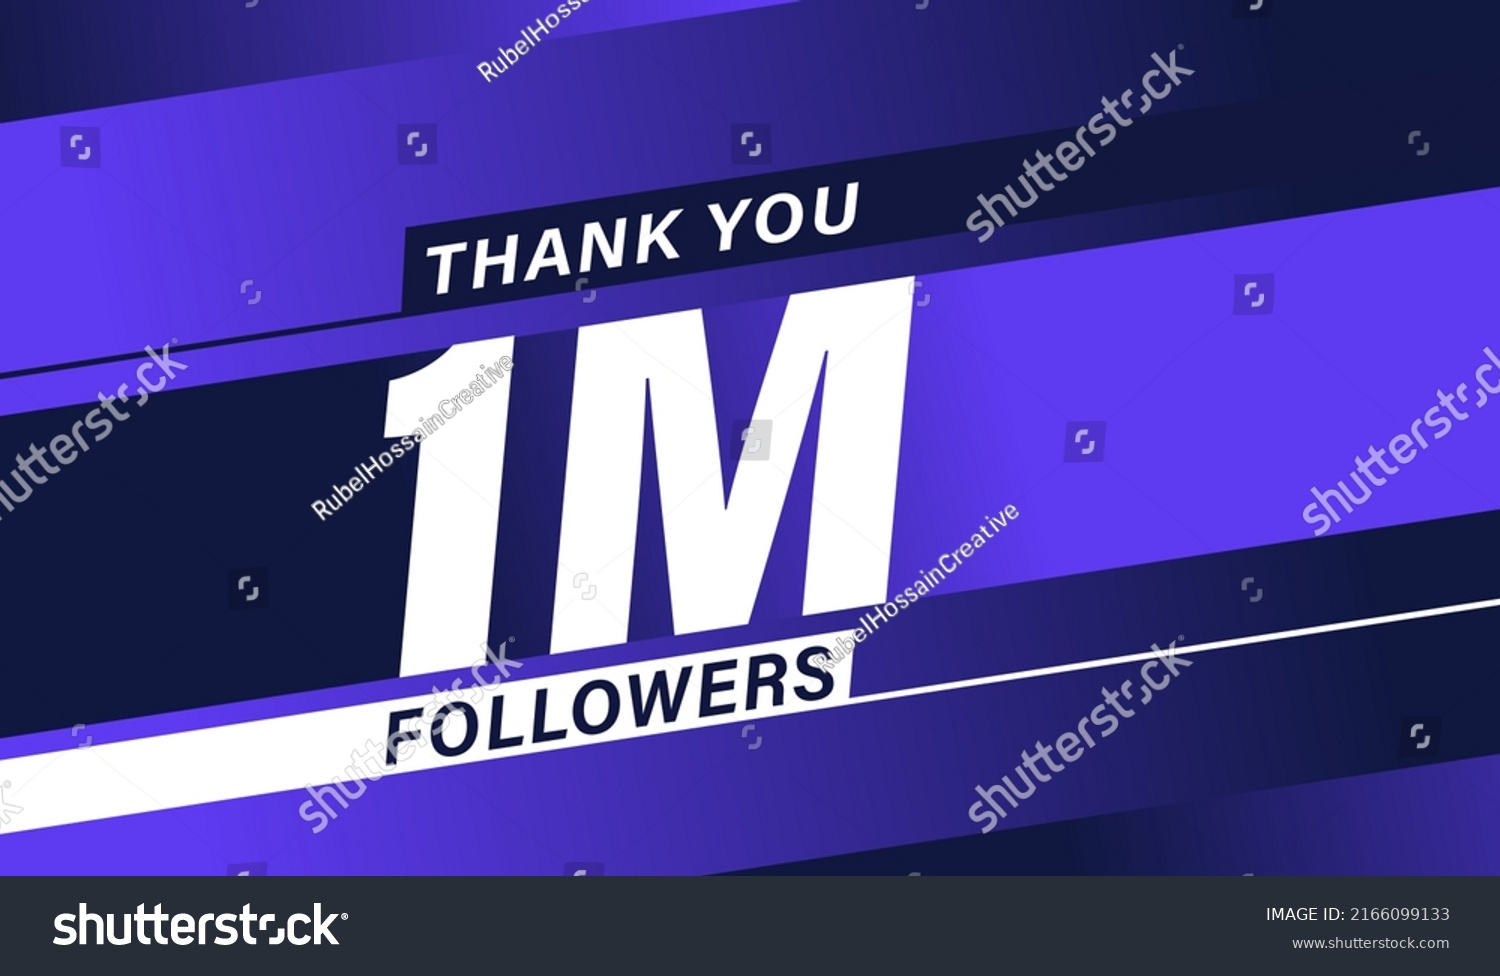 Thank you 1 million followers, modern banner design vectors #2166099133